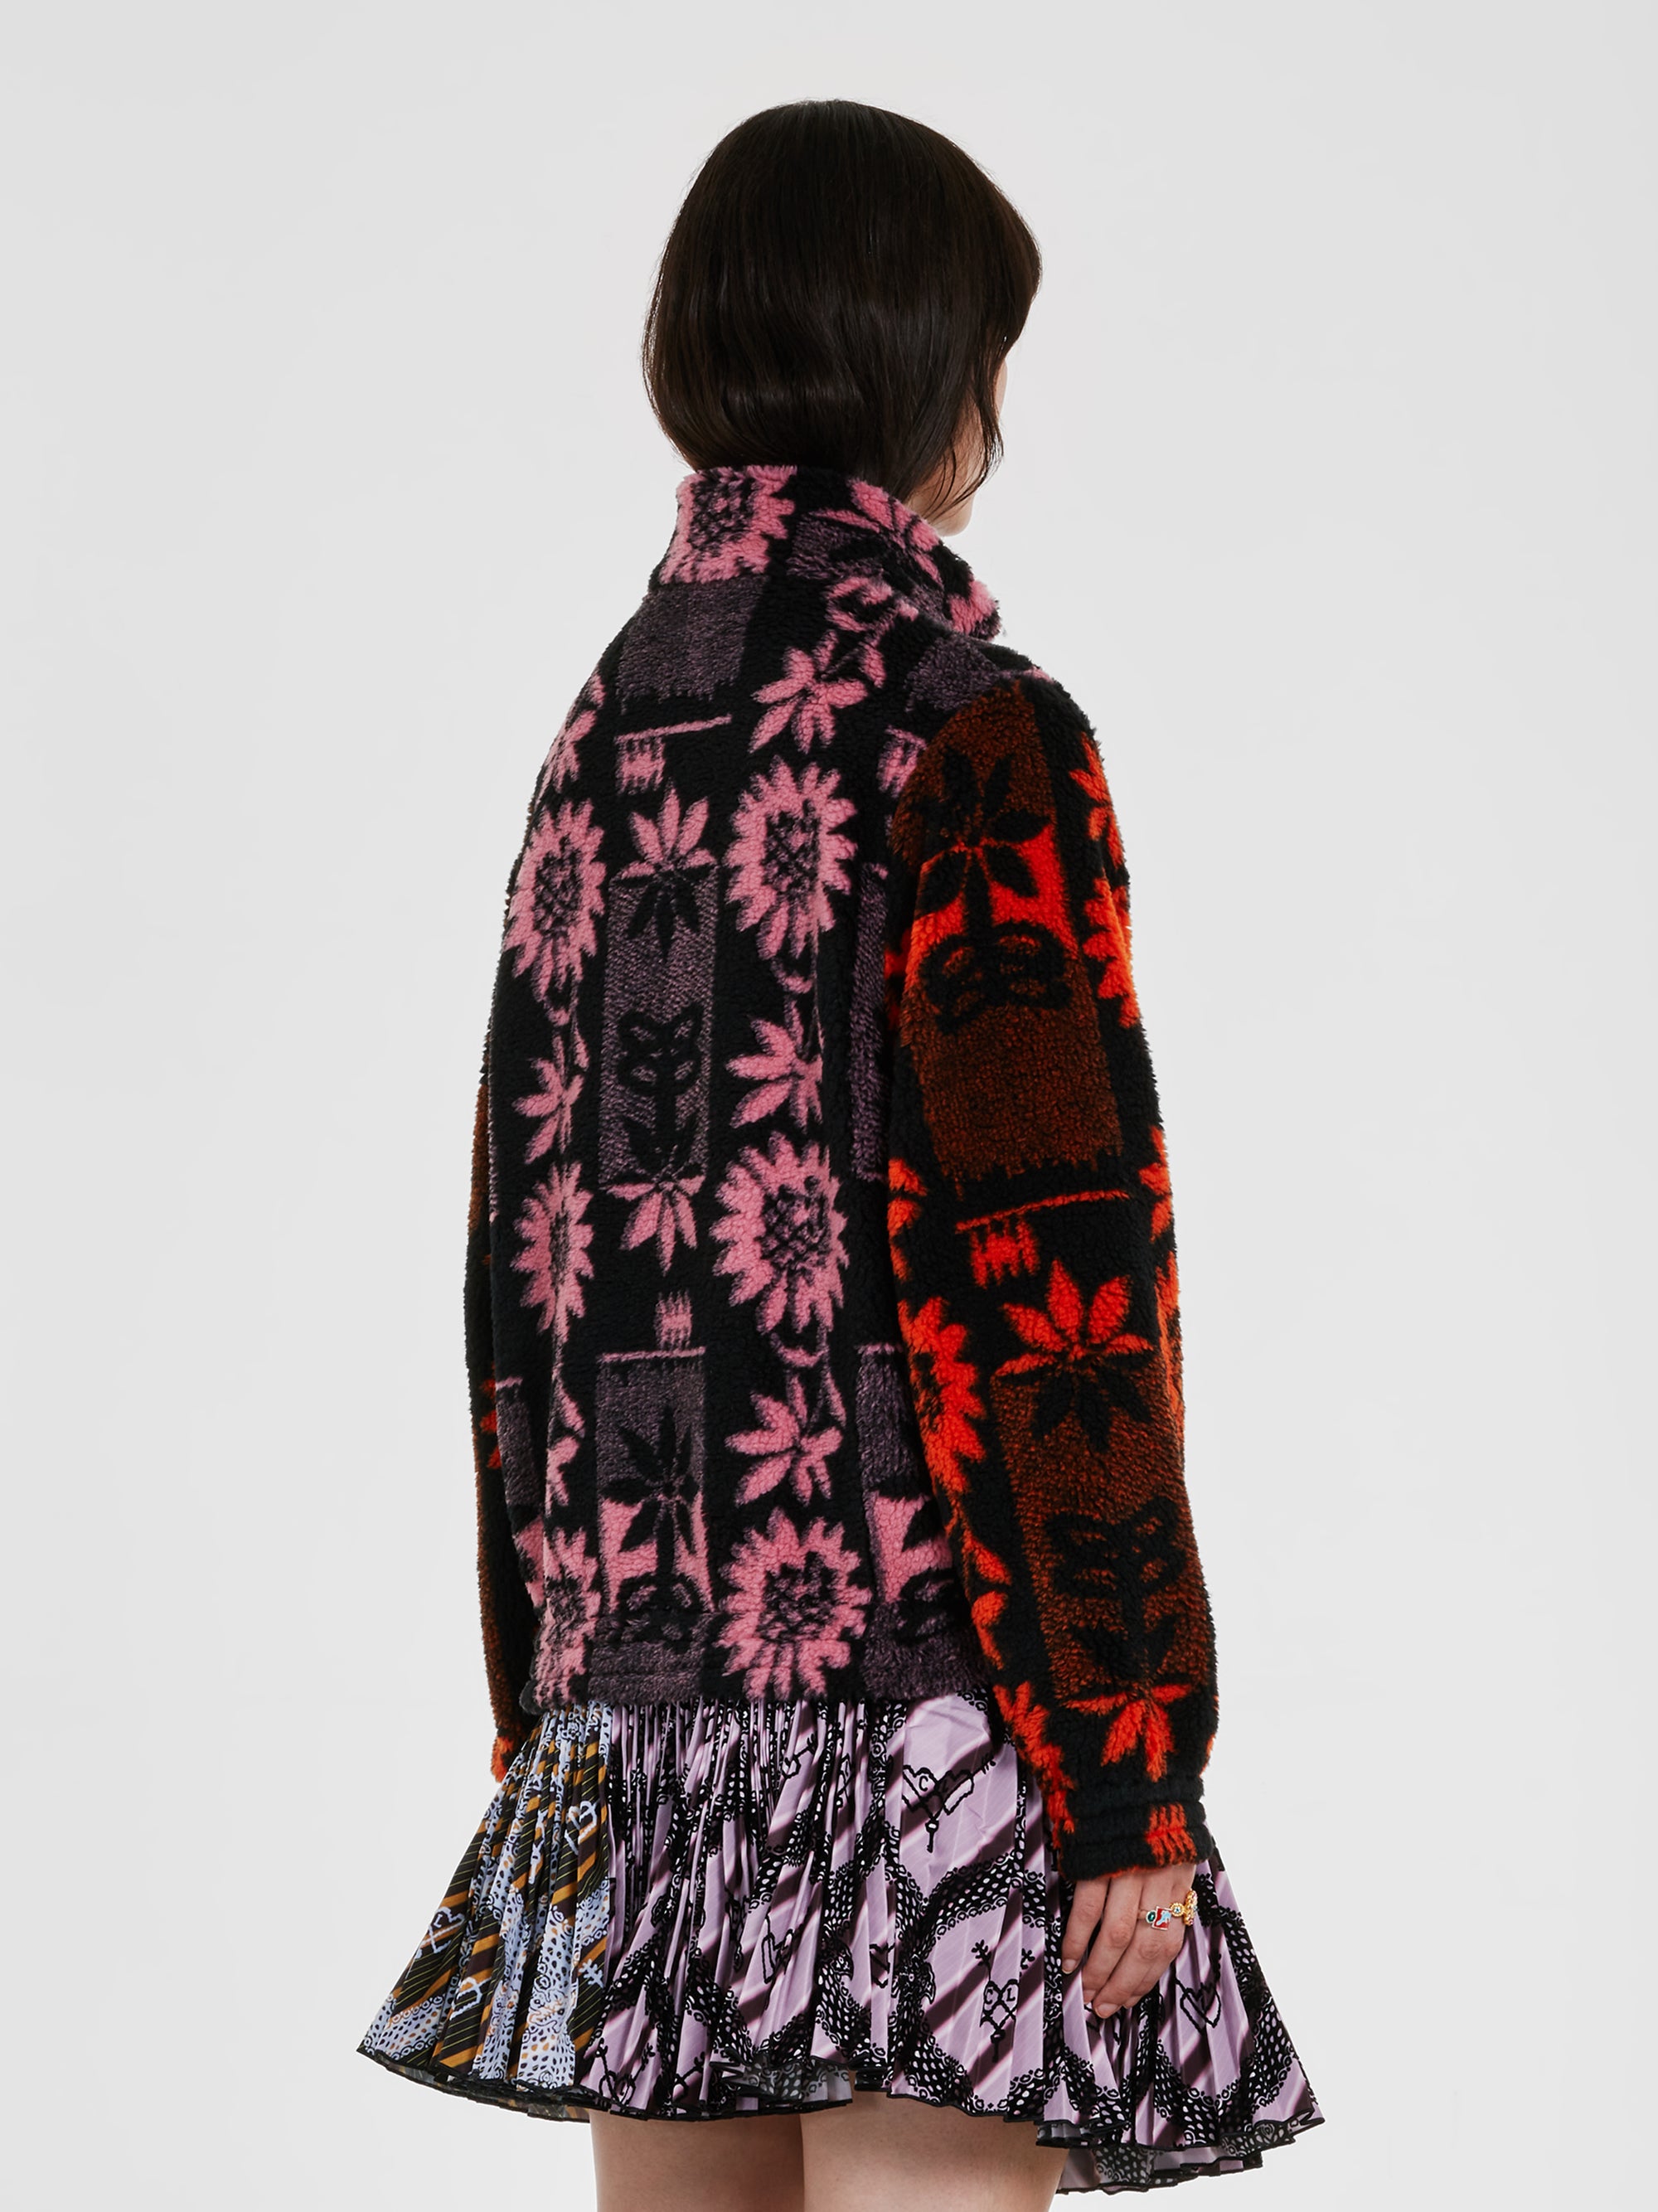 Chopova Lowena - Women’s Sunflower Knitted Fleece - (Pink/Orange) view 3